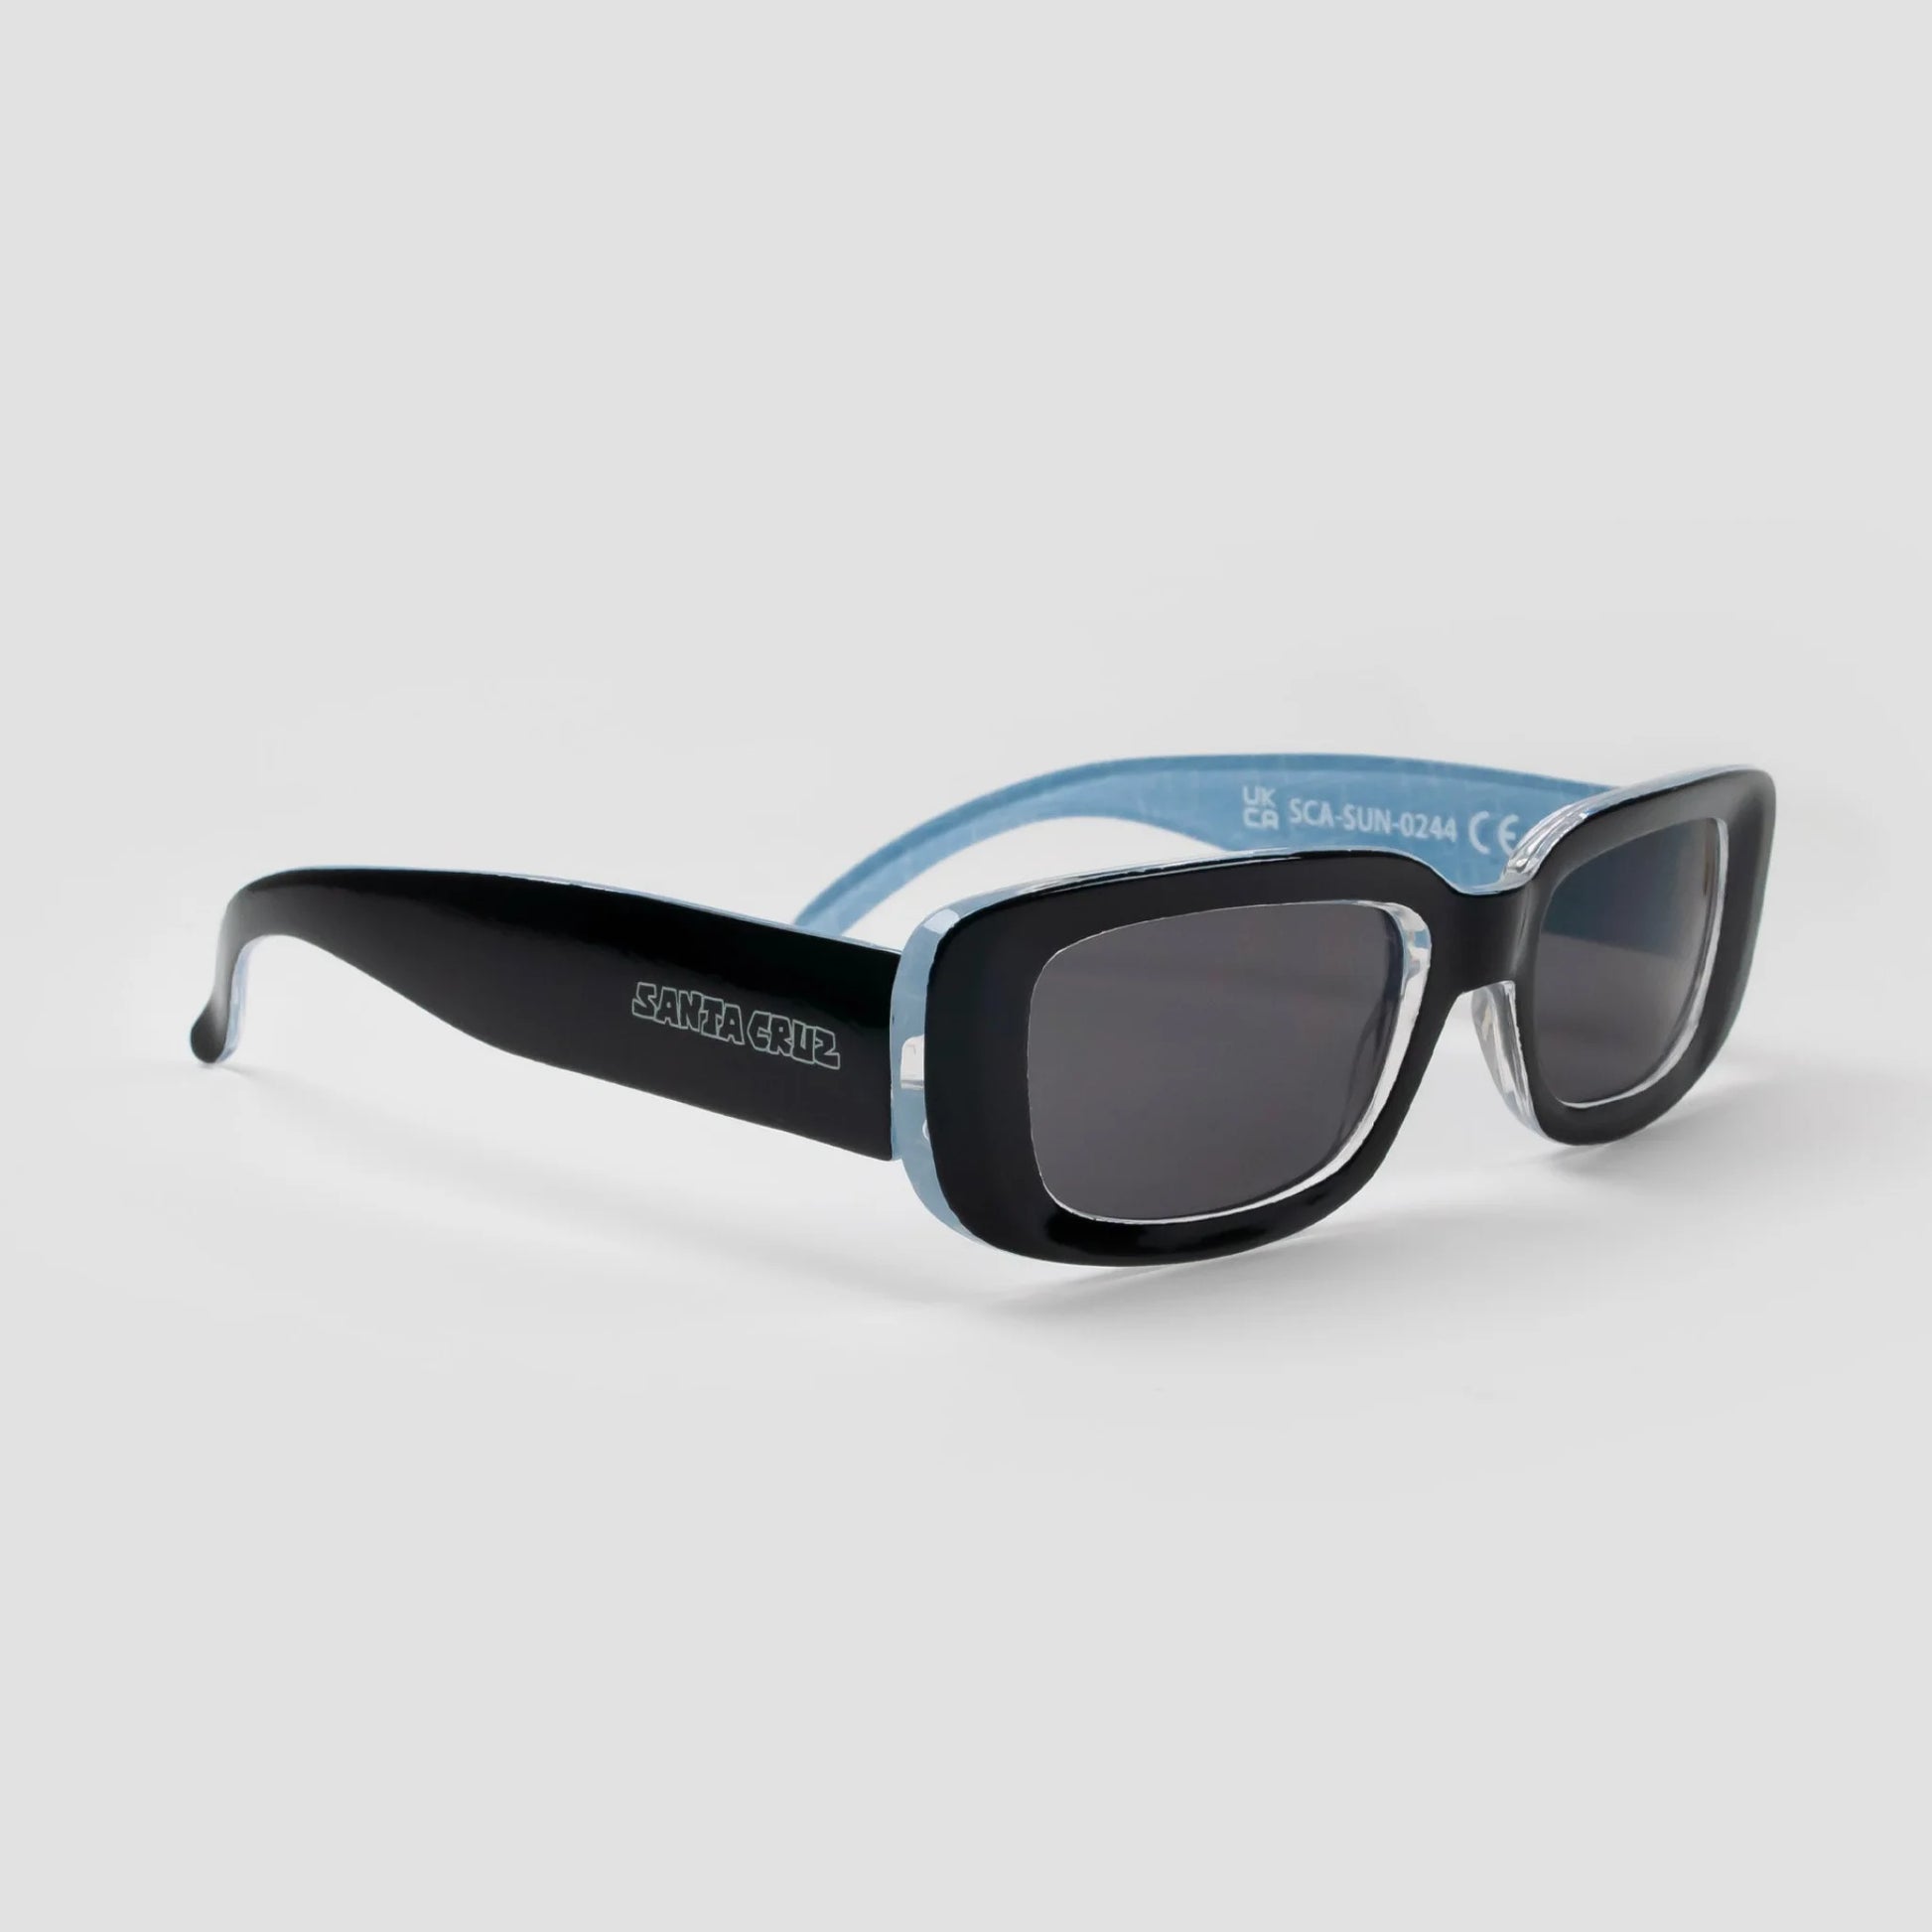 Santa Cruz Speed MFG Sunglasses - Black/Dusty Blue - Prime Delux Store